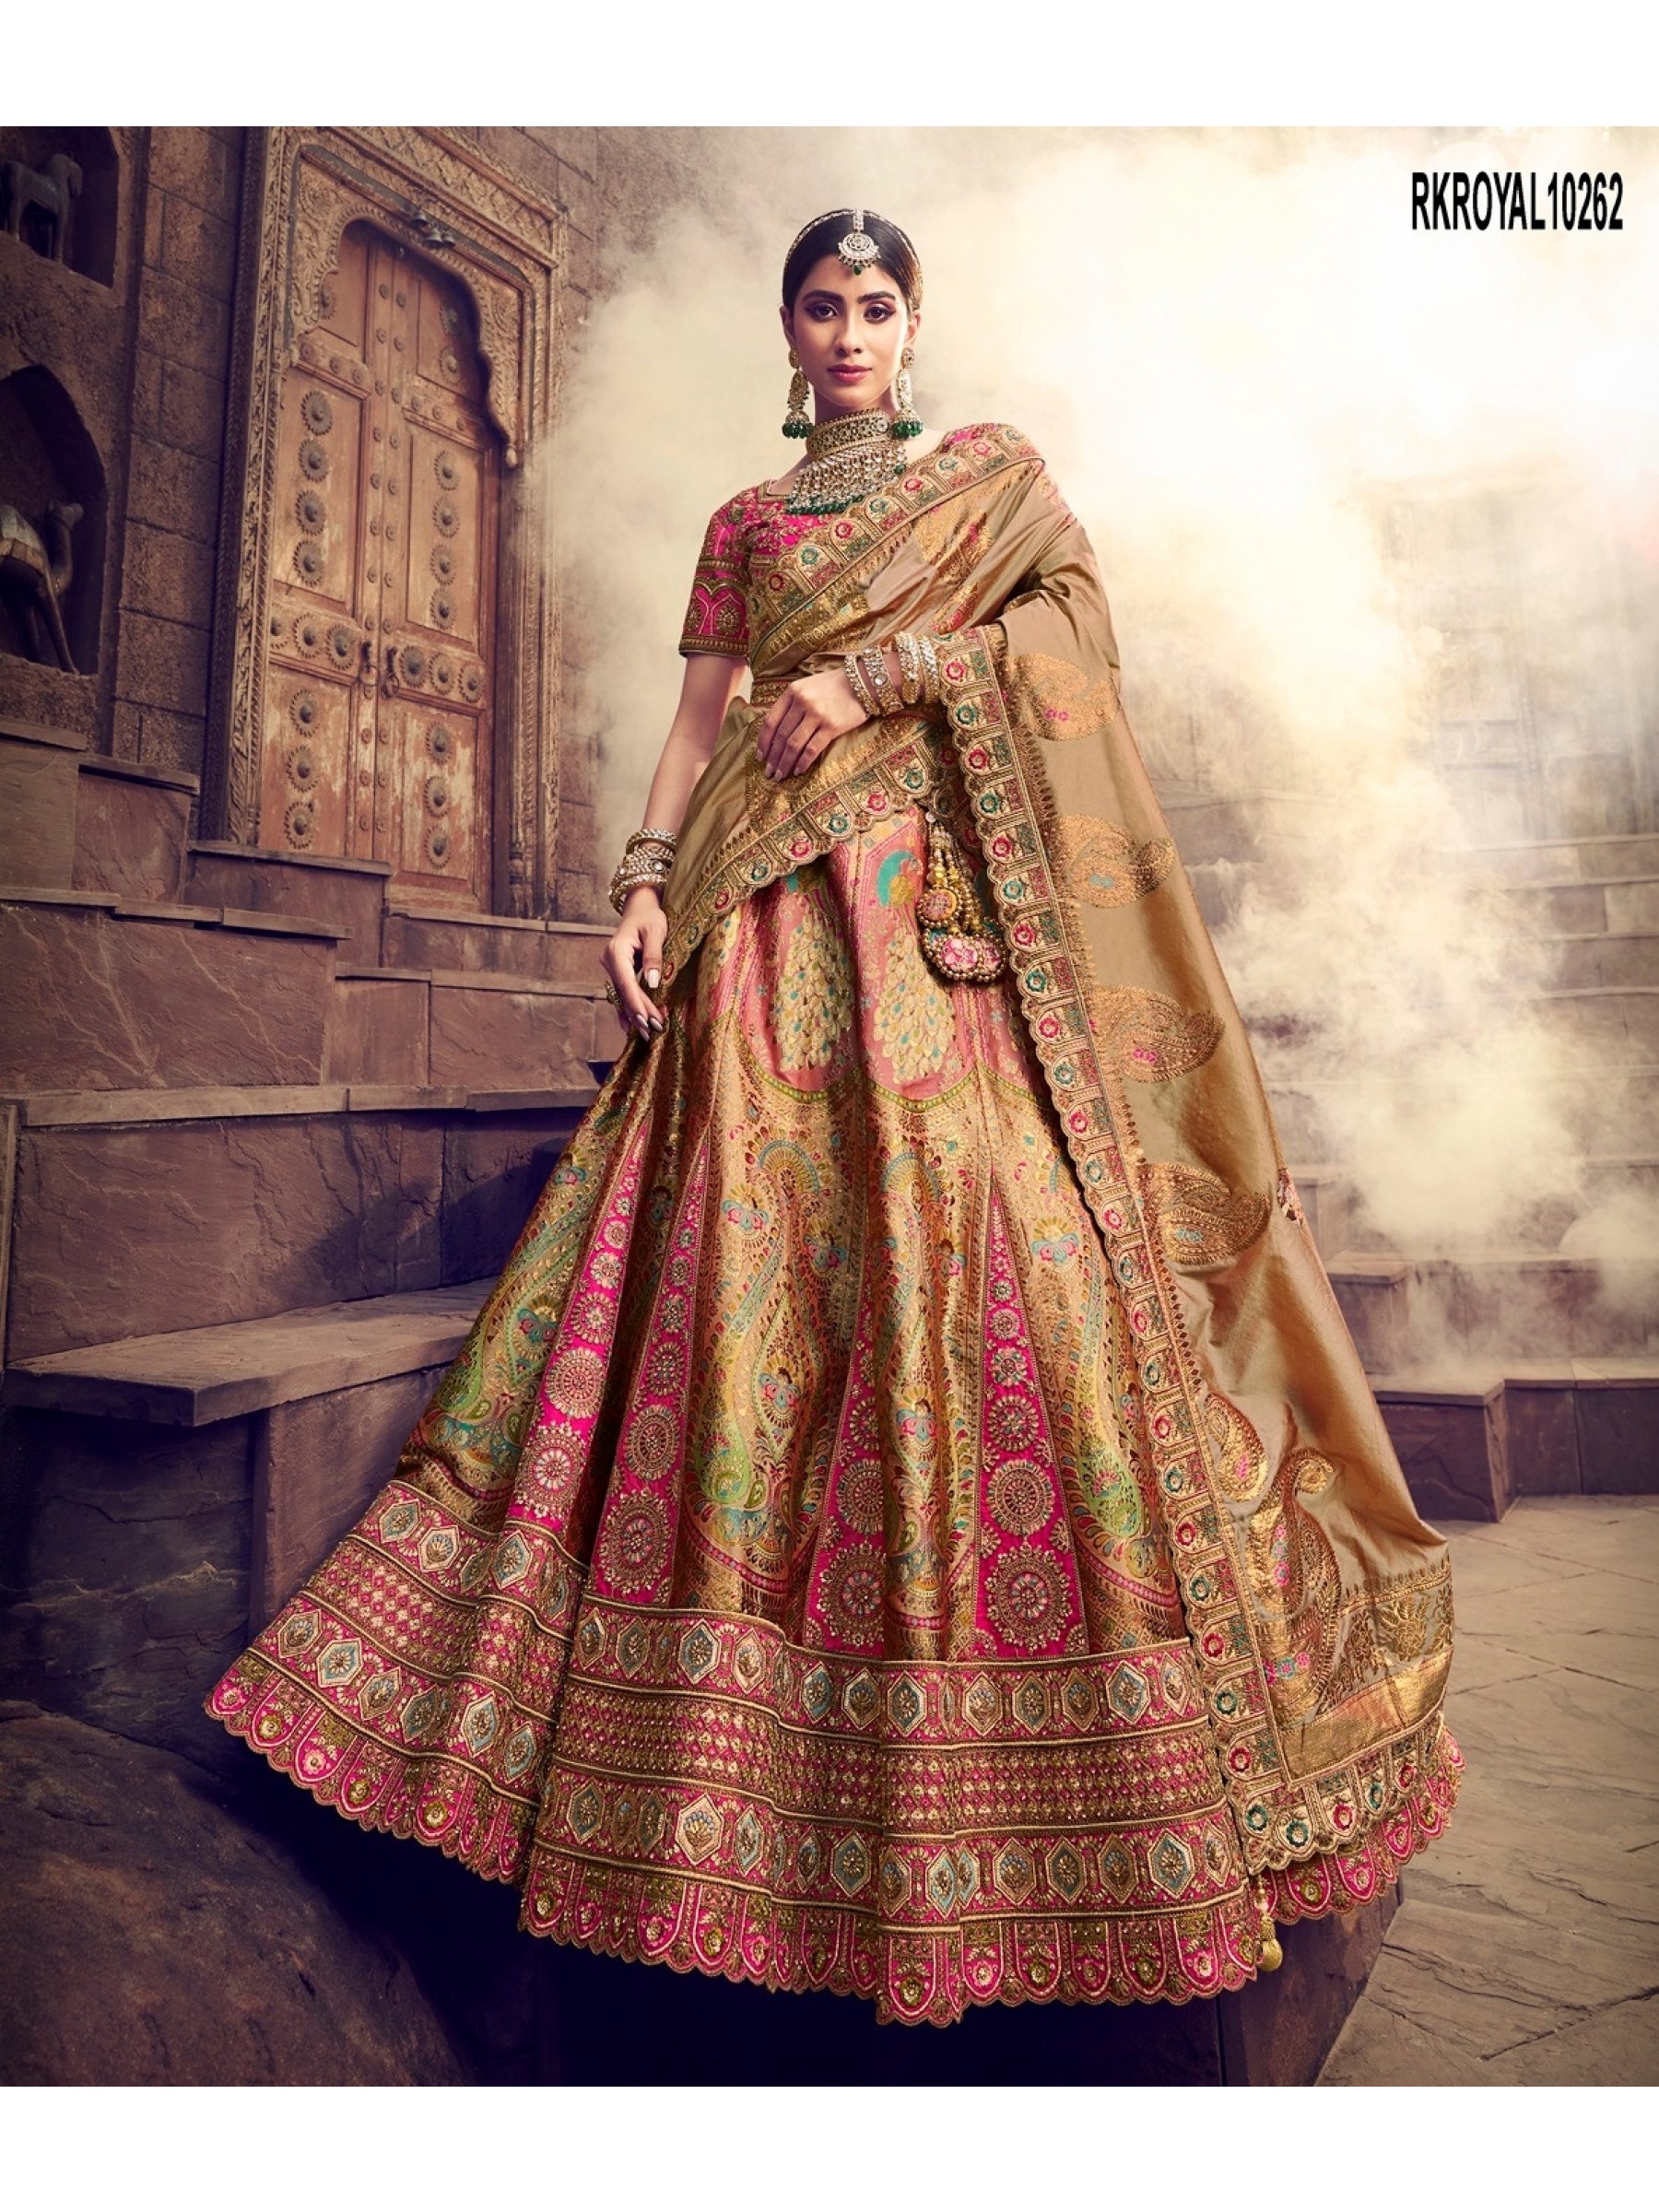 Pure Banarasi Silk Wedding Lehenga in Multi Color With Embroidery work